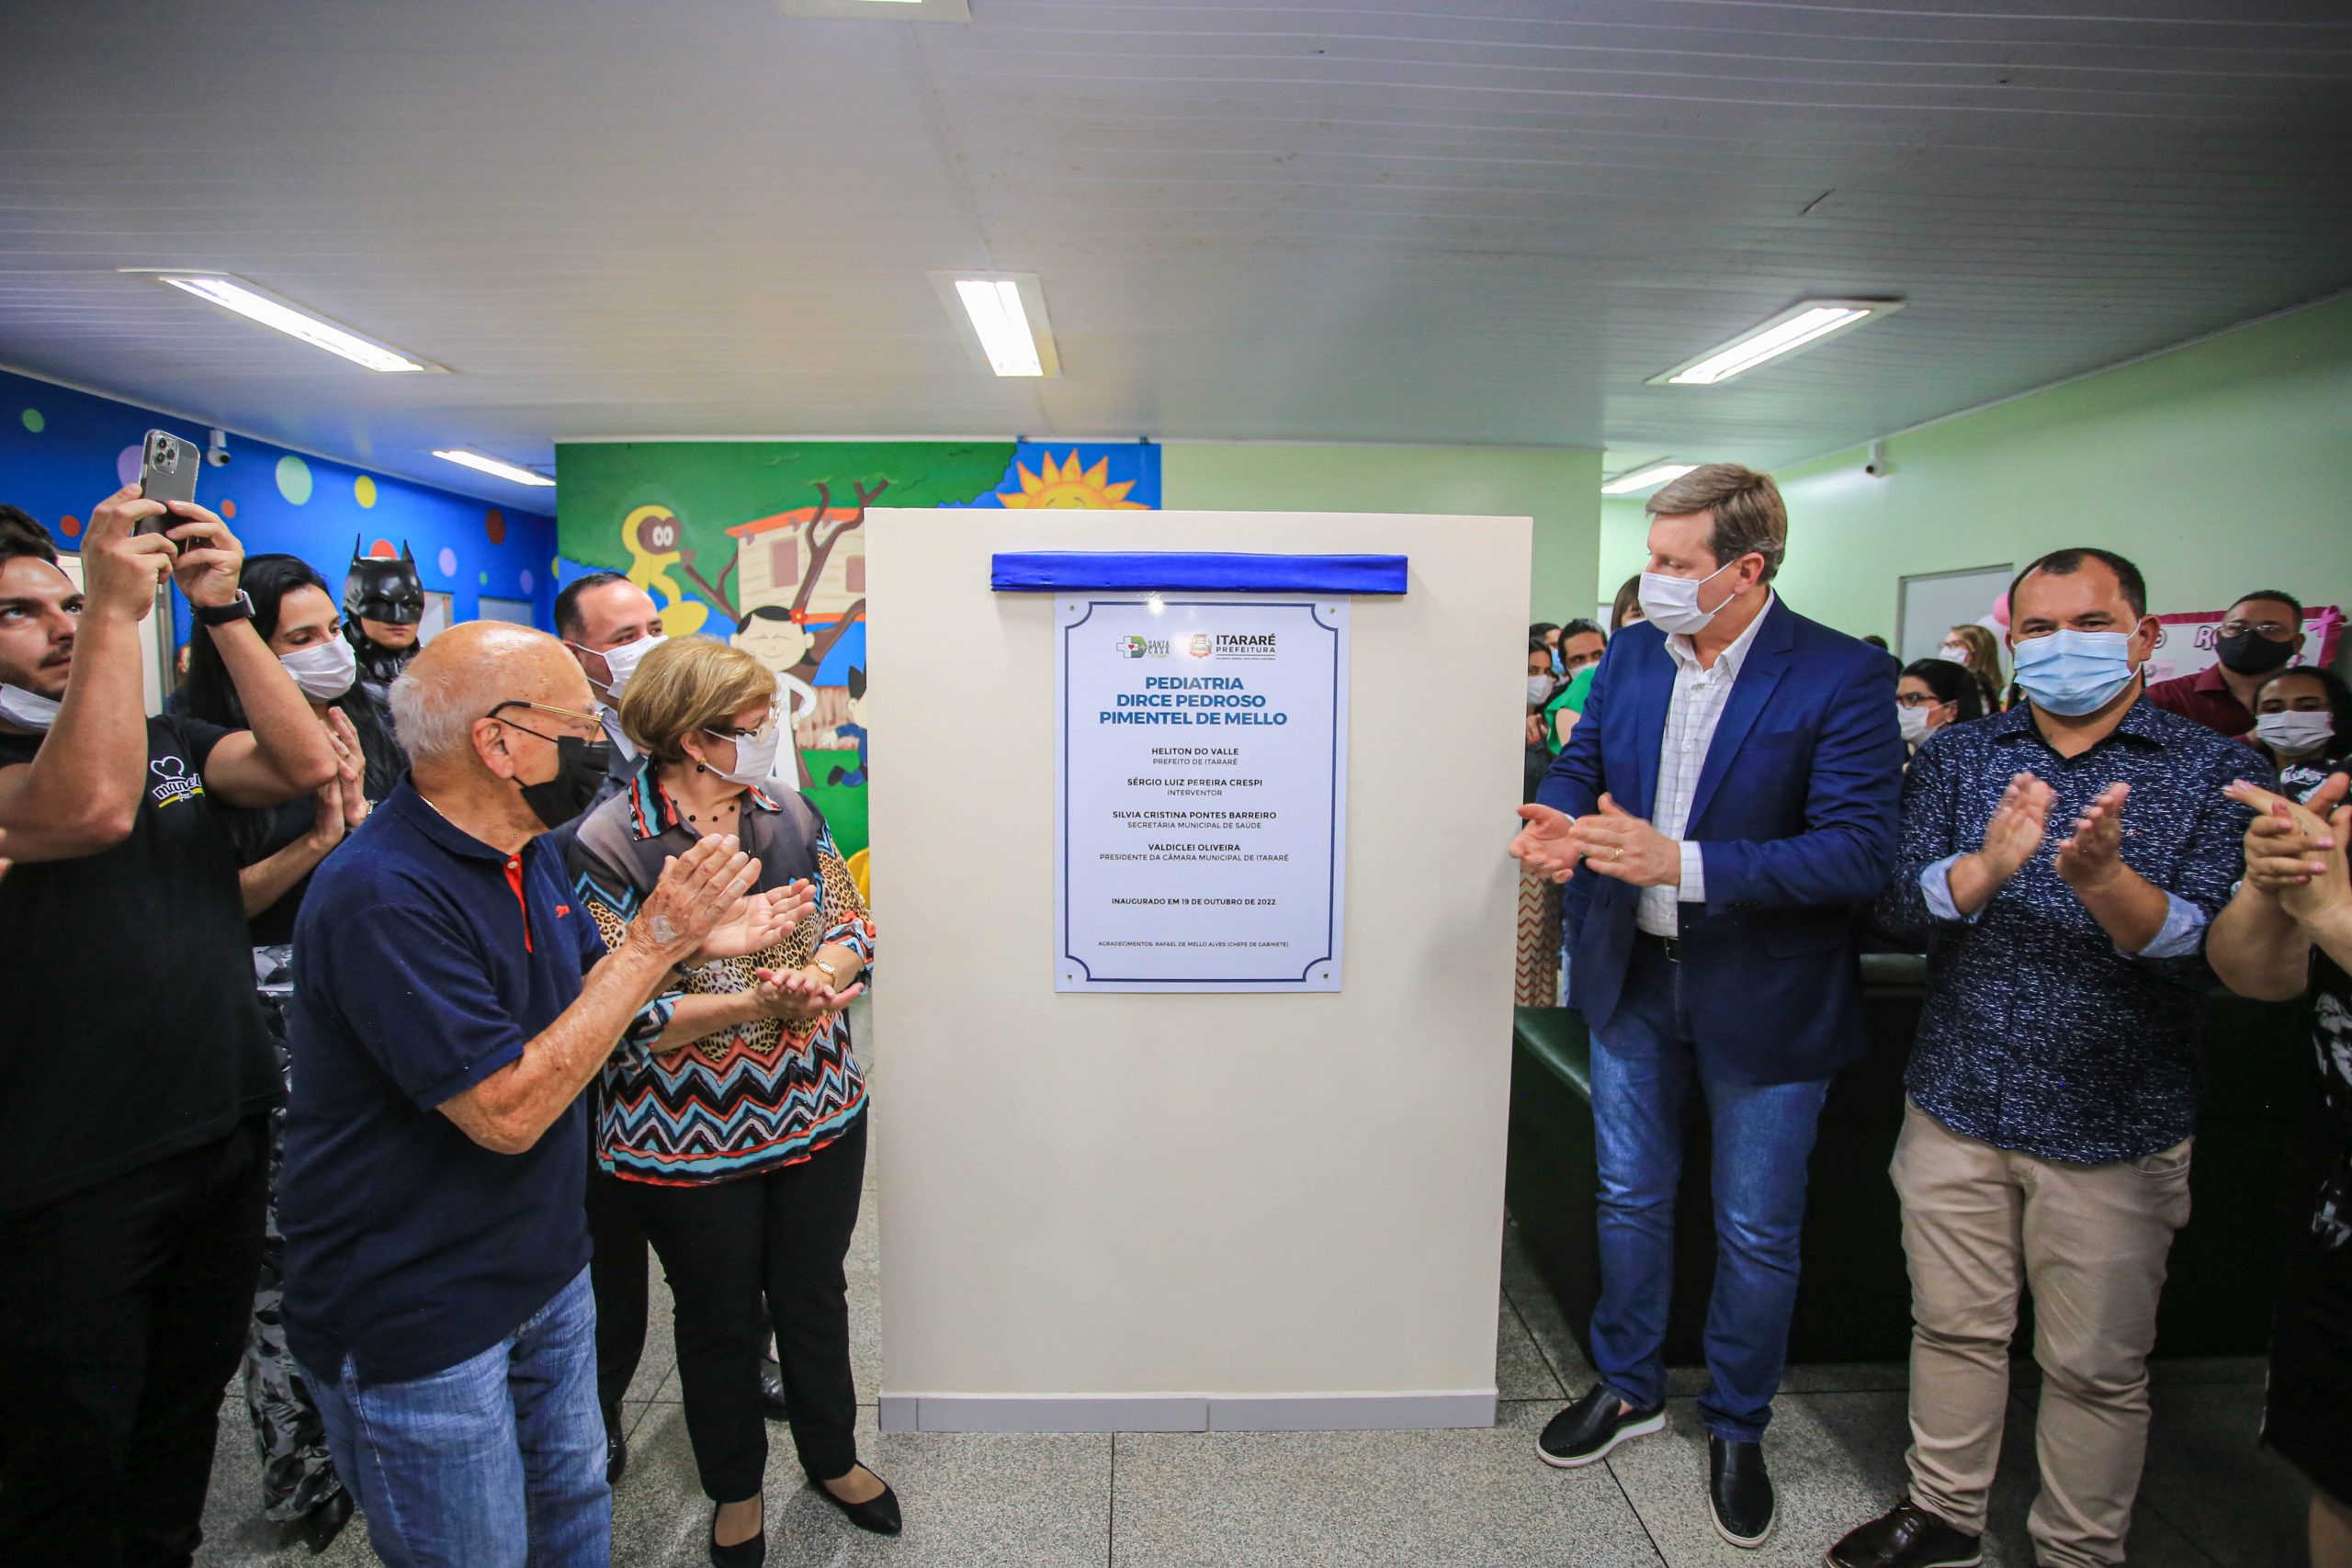 Santa Casa de Itararé (SP) inaugura nova ala pediátrica ‘Dirce Pedroso Pimentel de Mello’